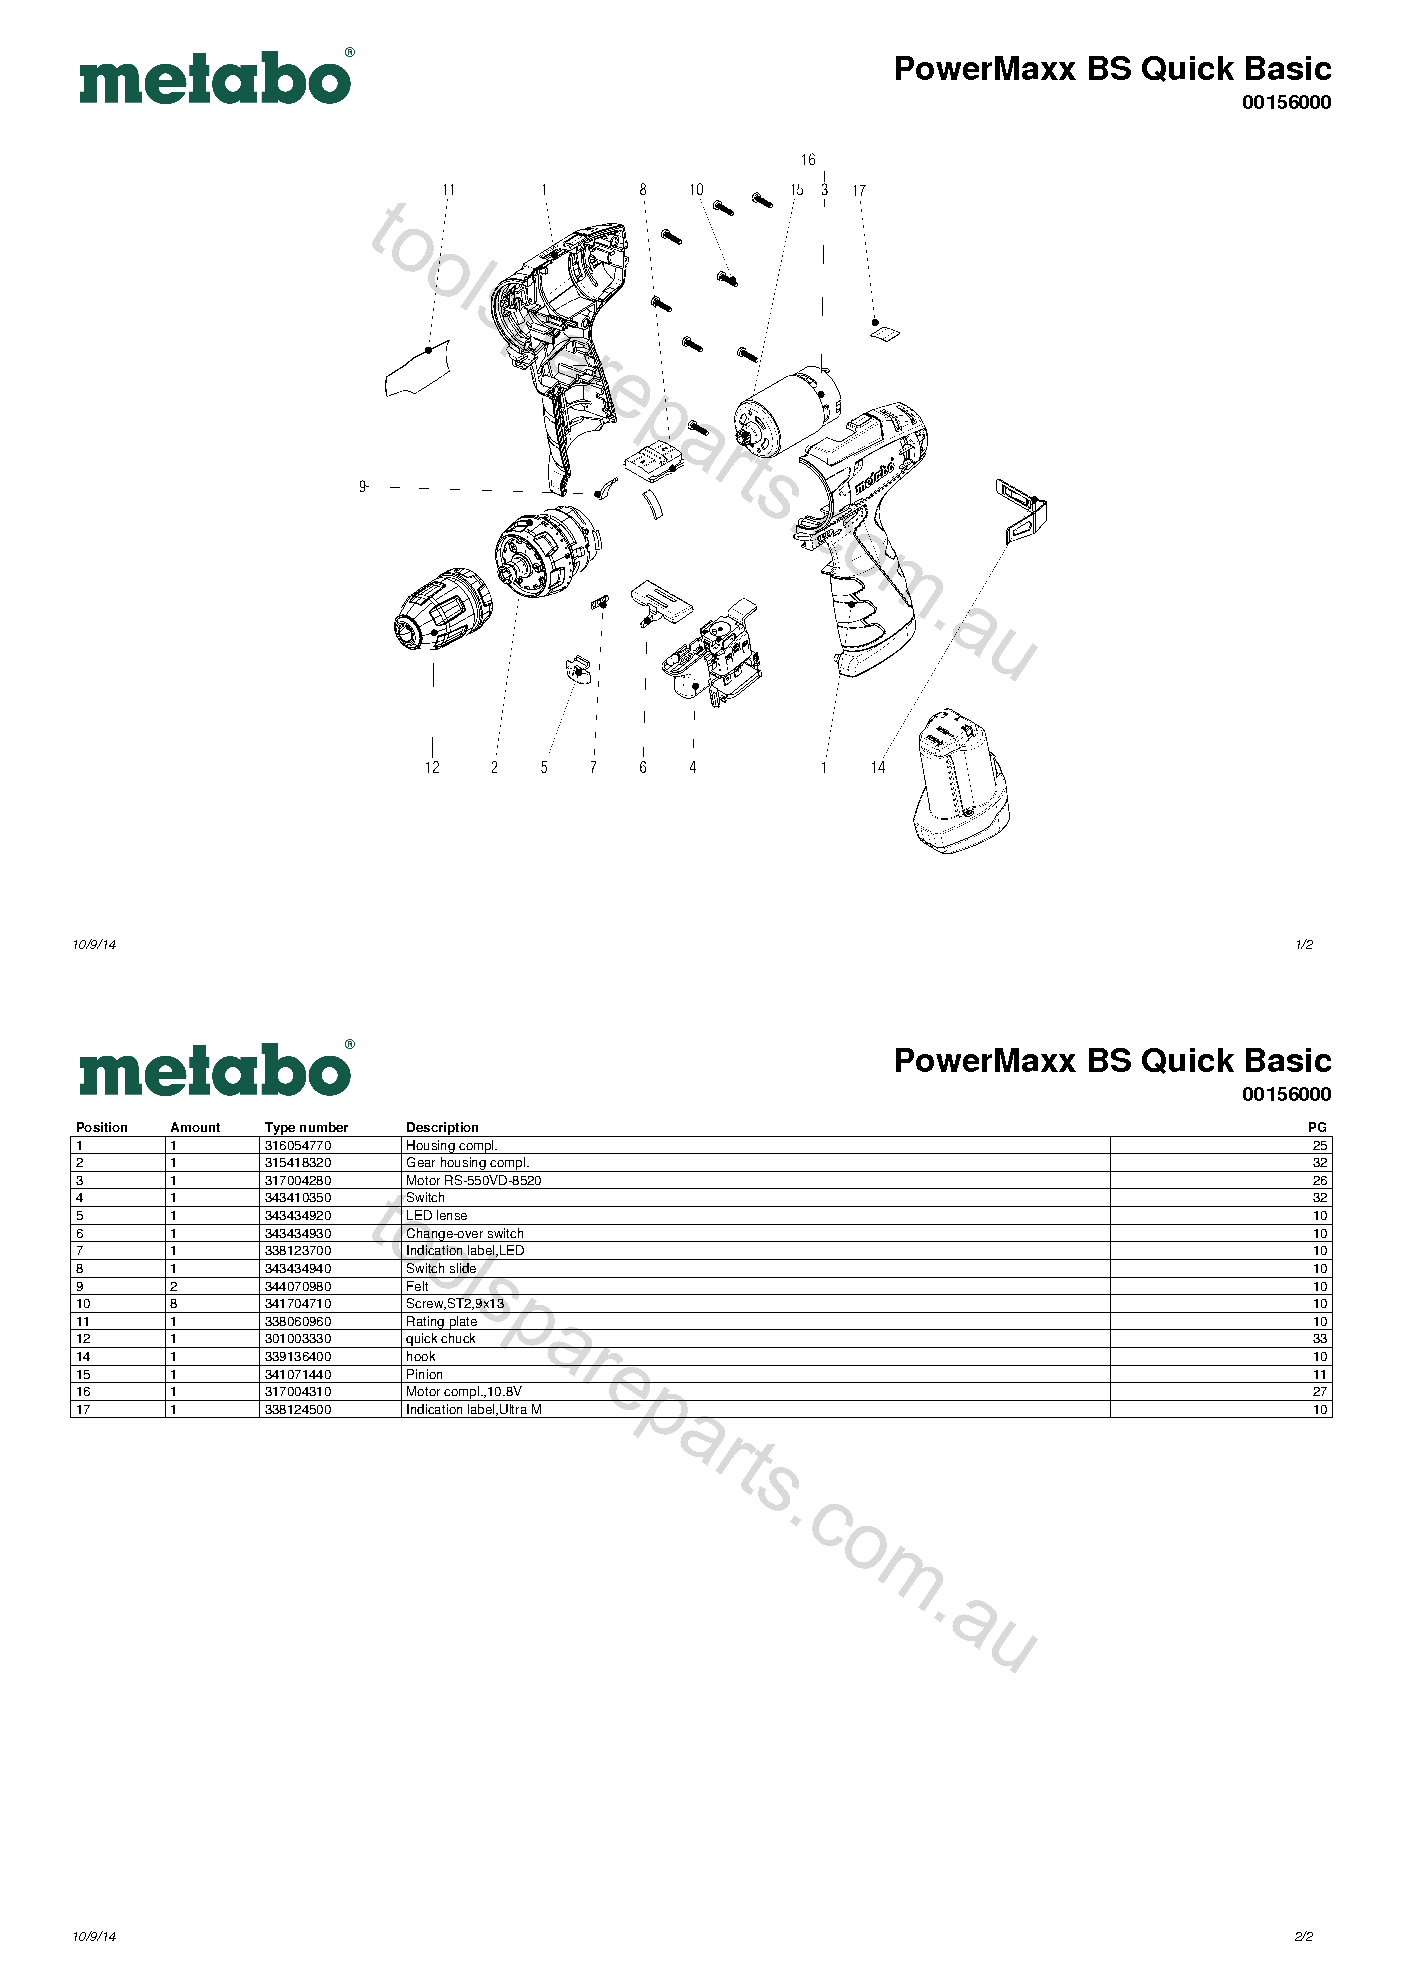 Metabo PowerMaxx BS Quick Basic 00156000  Diagram 1